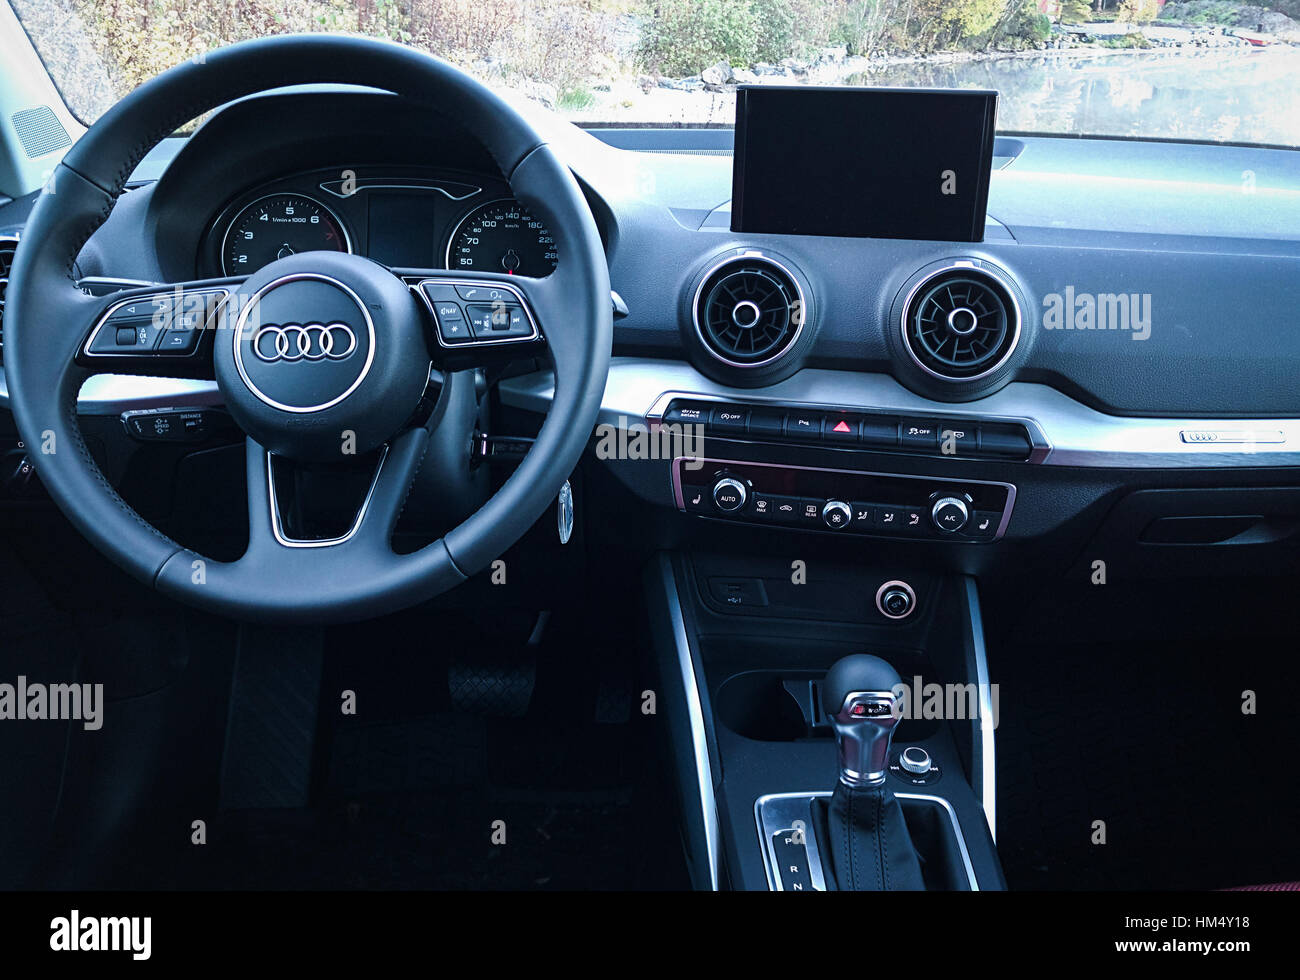 Audi Q2 interior Stock Photo - Alamy